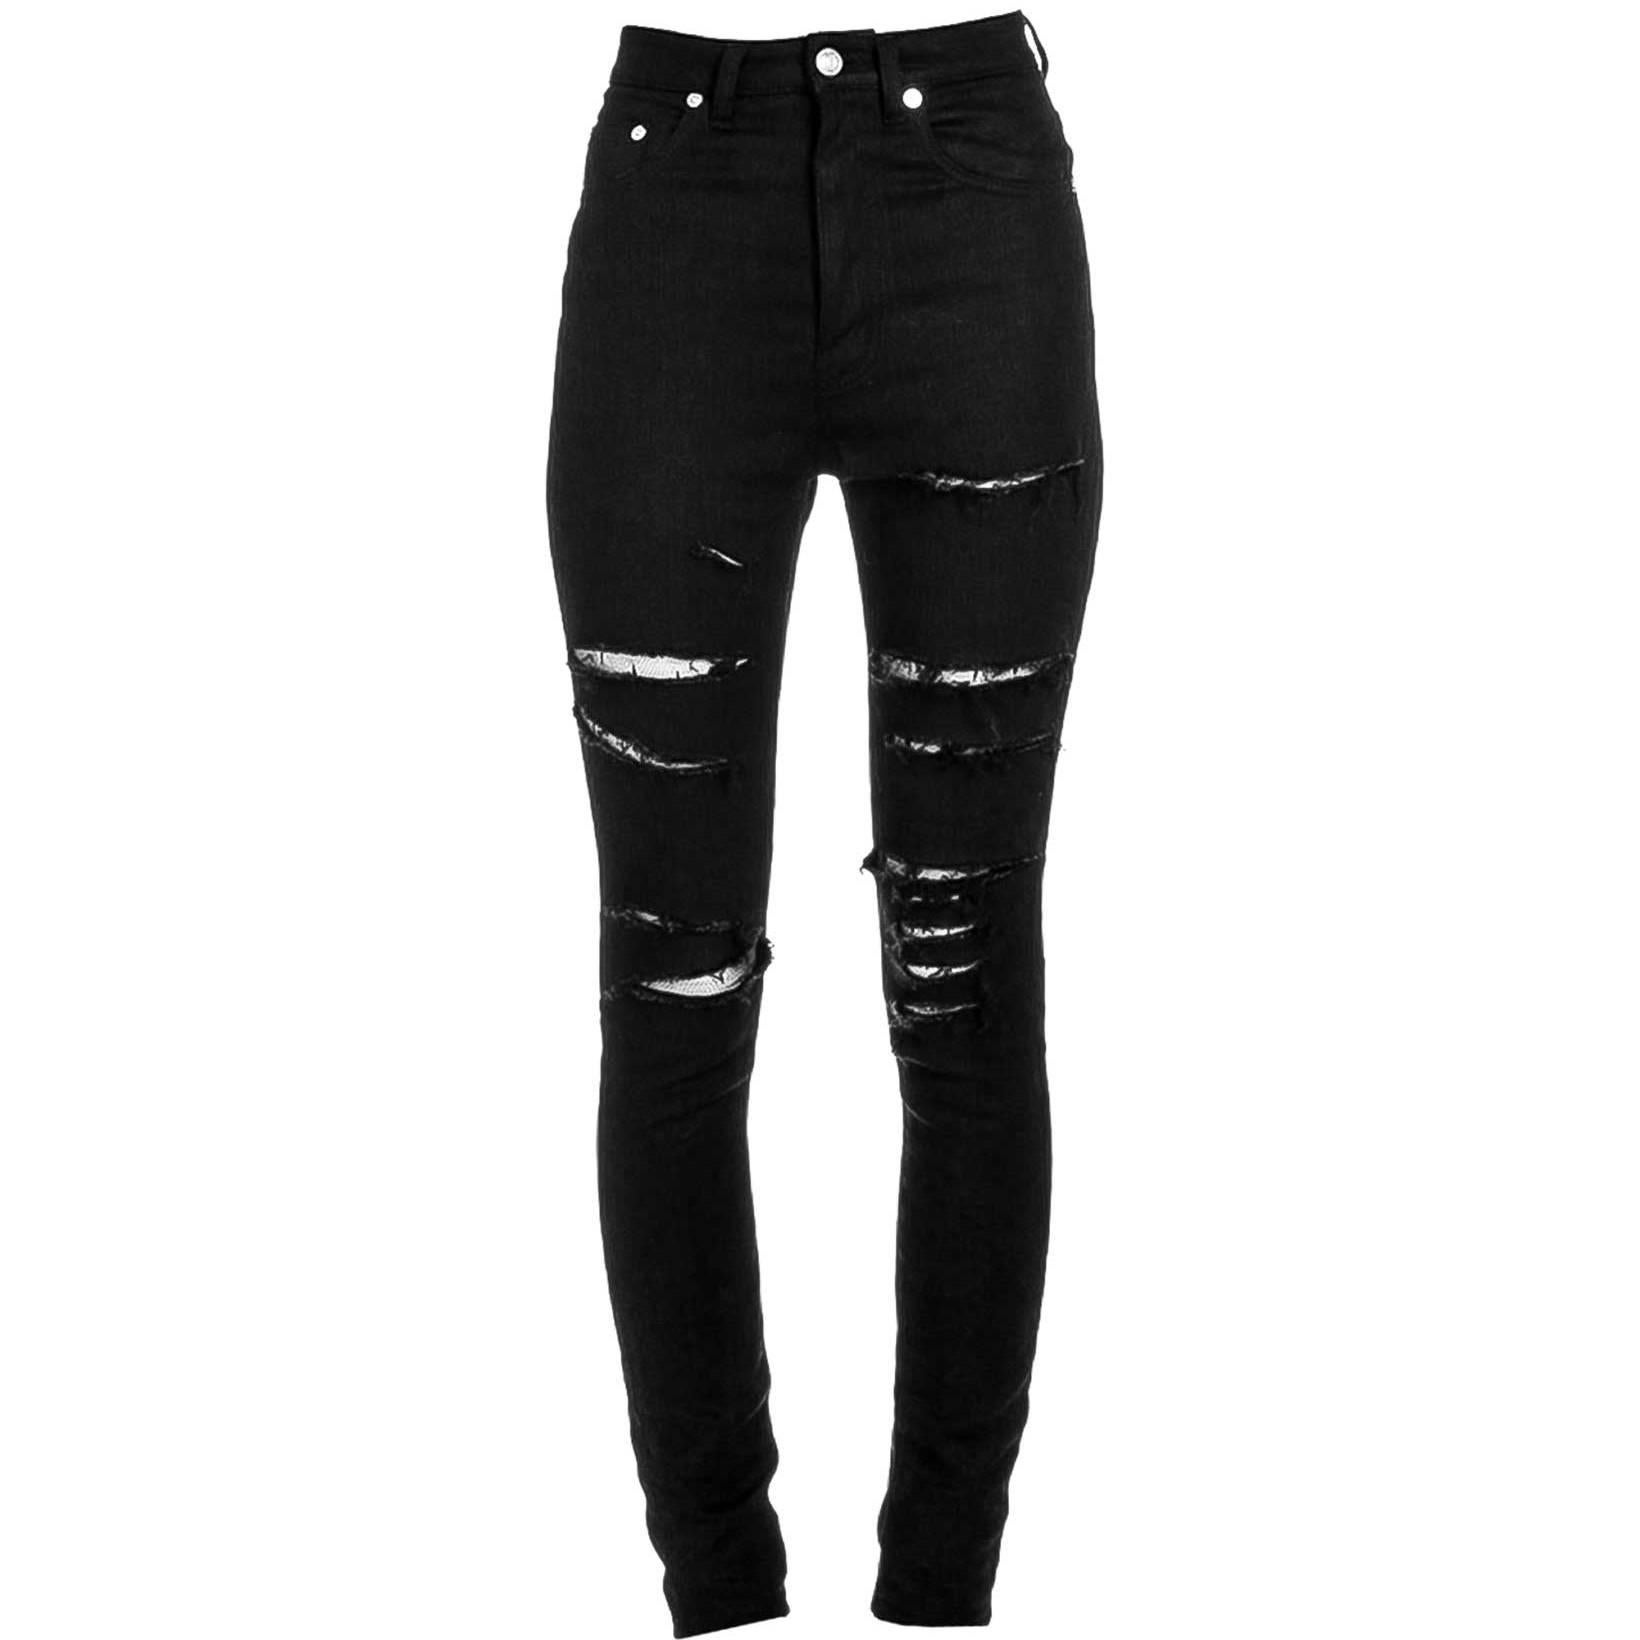 Saint Laurent Black Distressed Skinny Jeans w/ Fishnet Inset sz 25 rt. $990